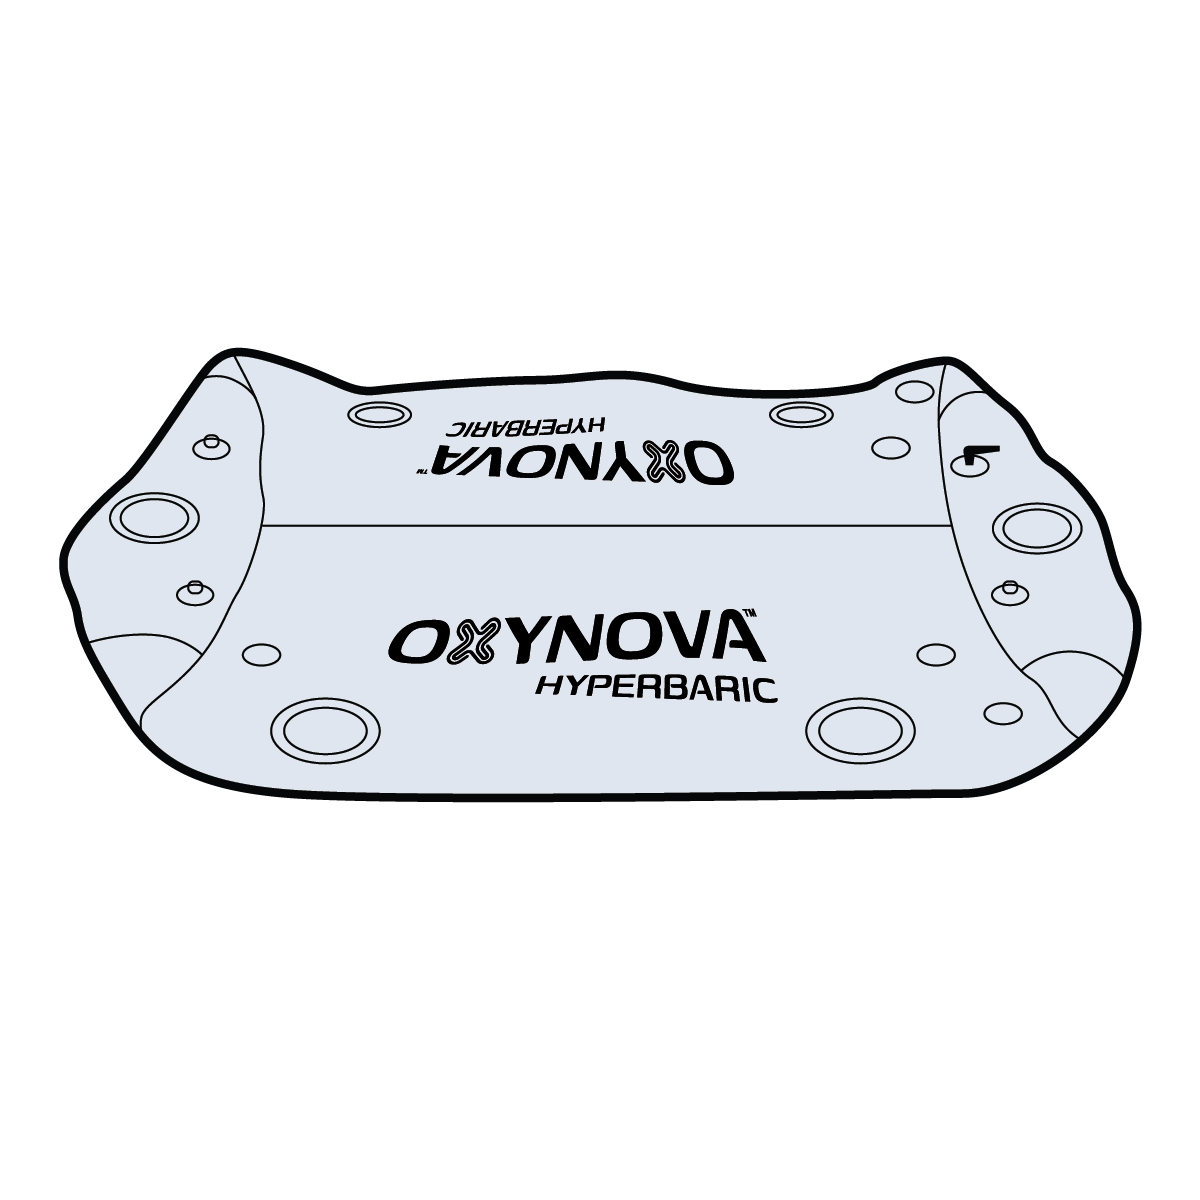 Oxynova portable hyperbaric Chambers